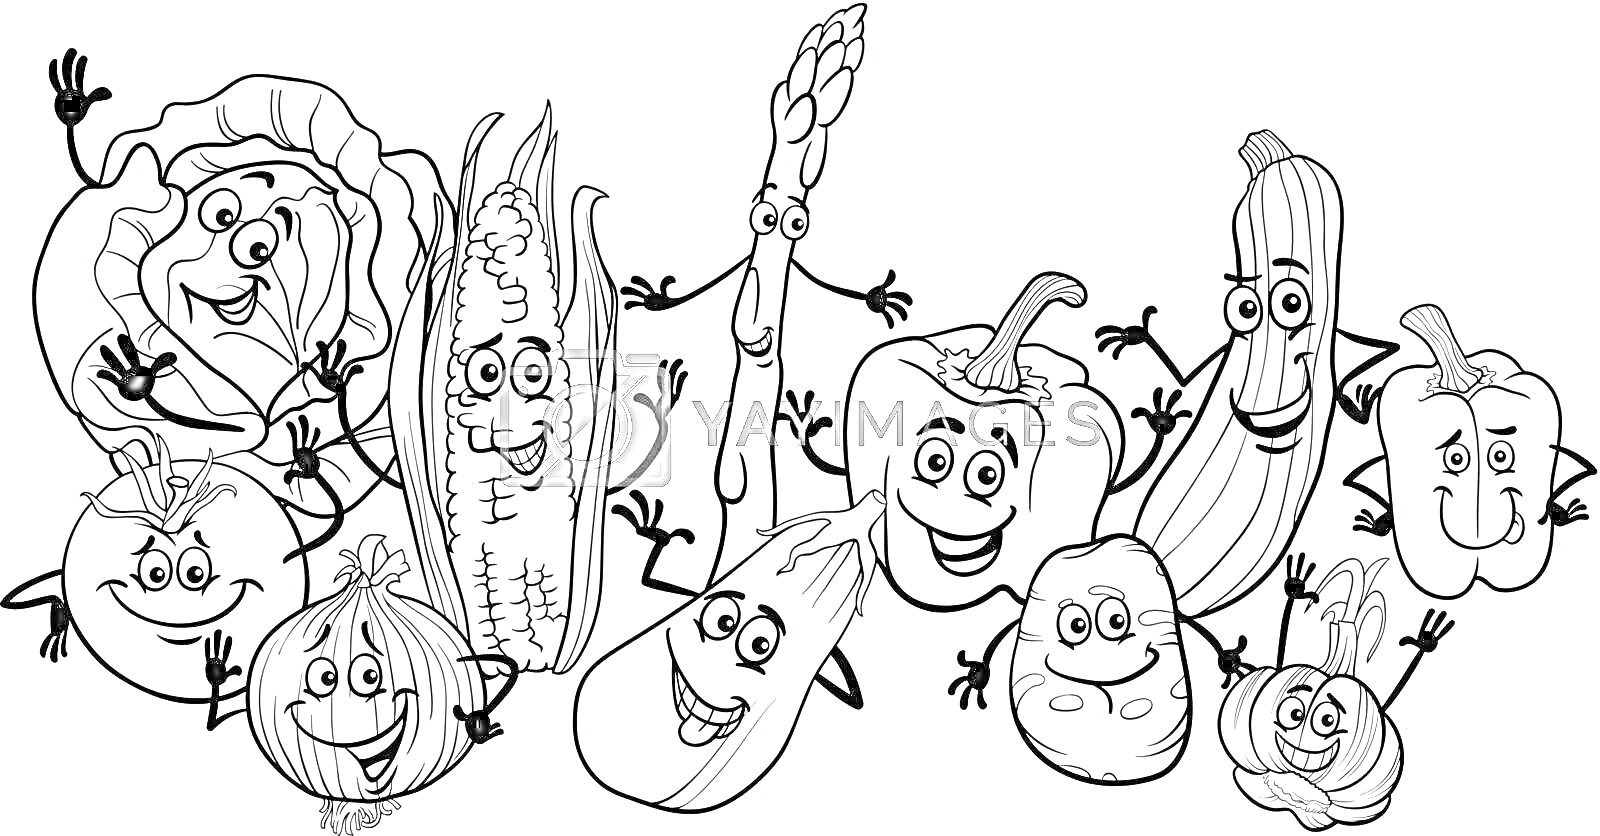 Раскраска Овощи с лицами: капуста, помидор, лук, кукуруза, баклажан, морковь, спаржа, перец, зуккини, редиска, брокколи